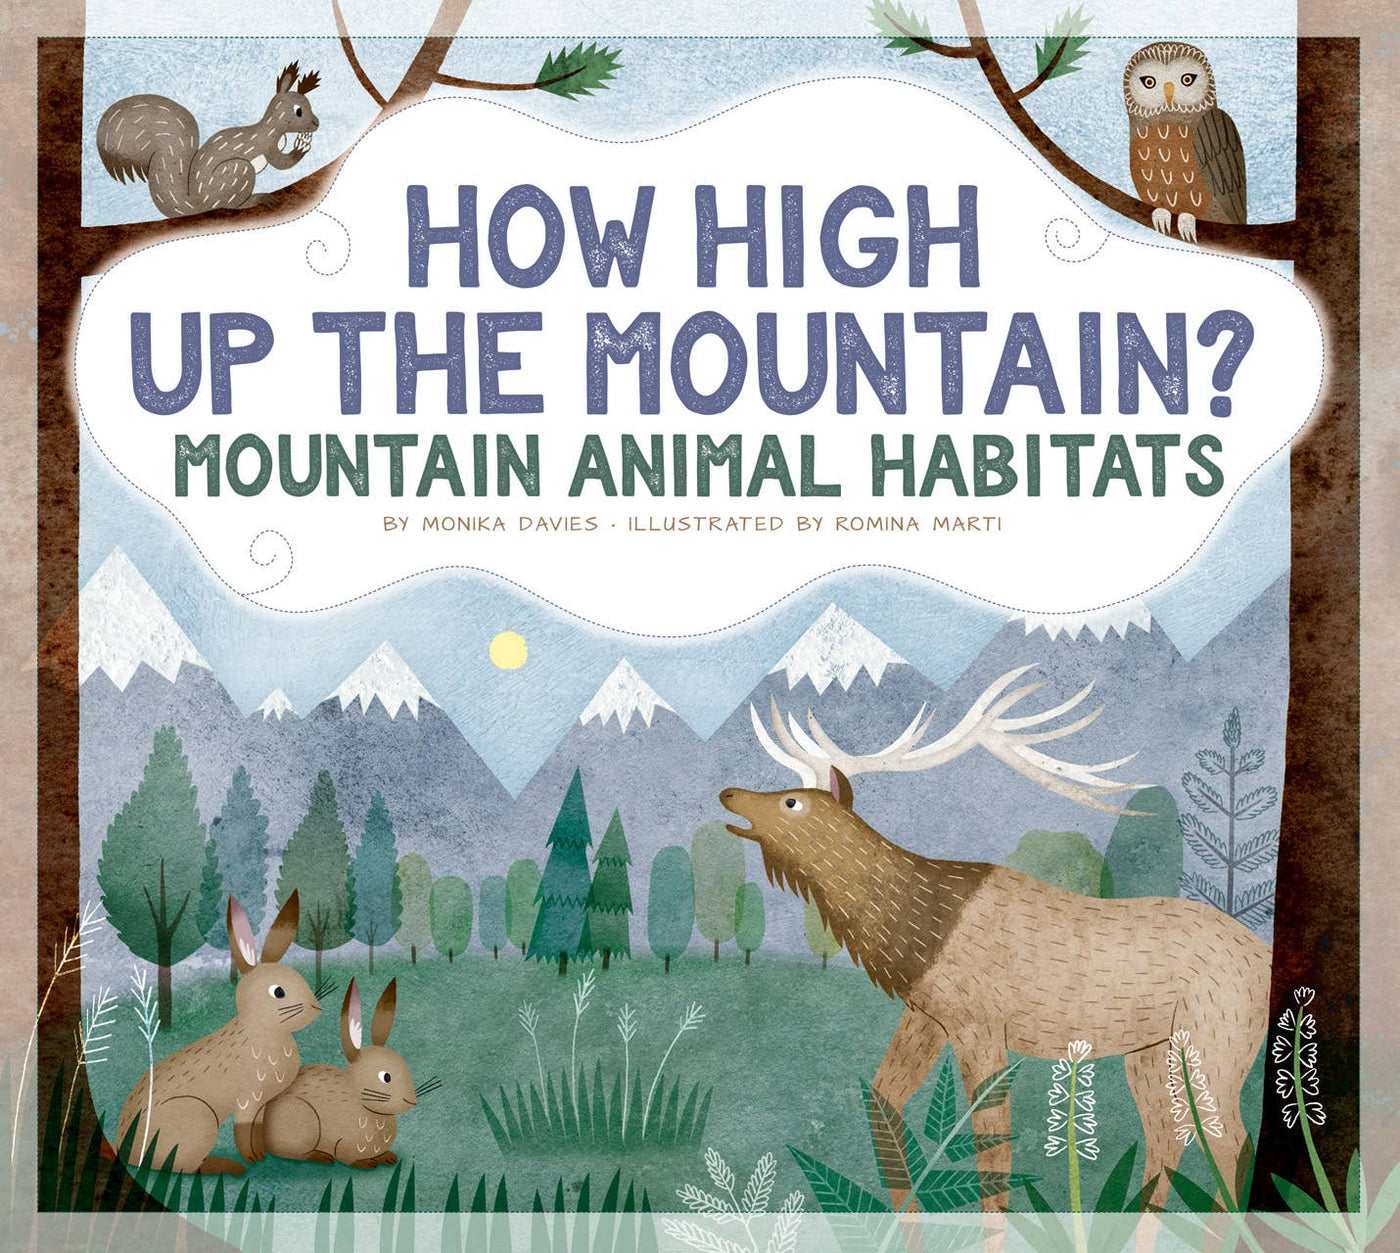 How High up the Mountain?: Mountain Animal Habitats